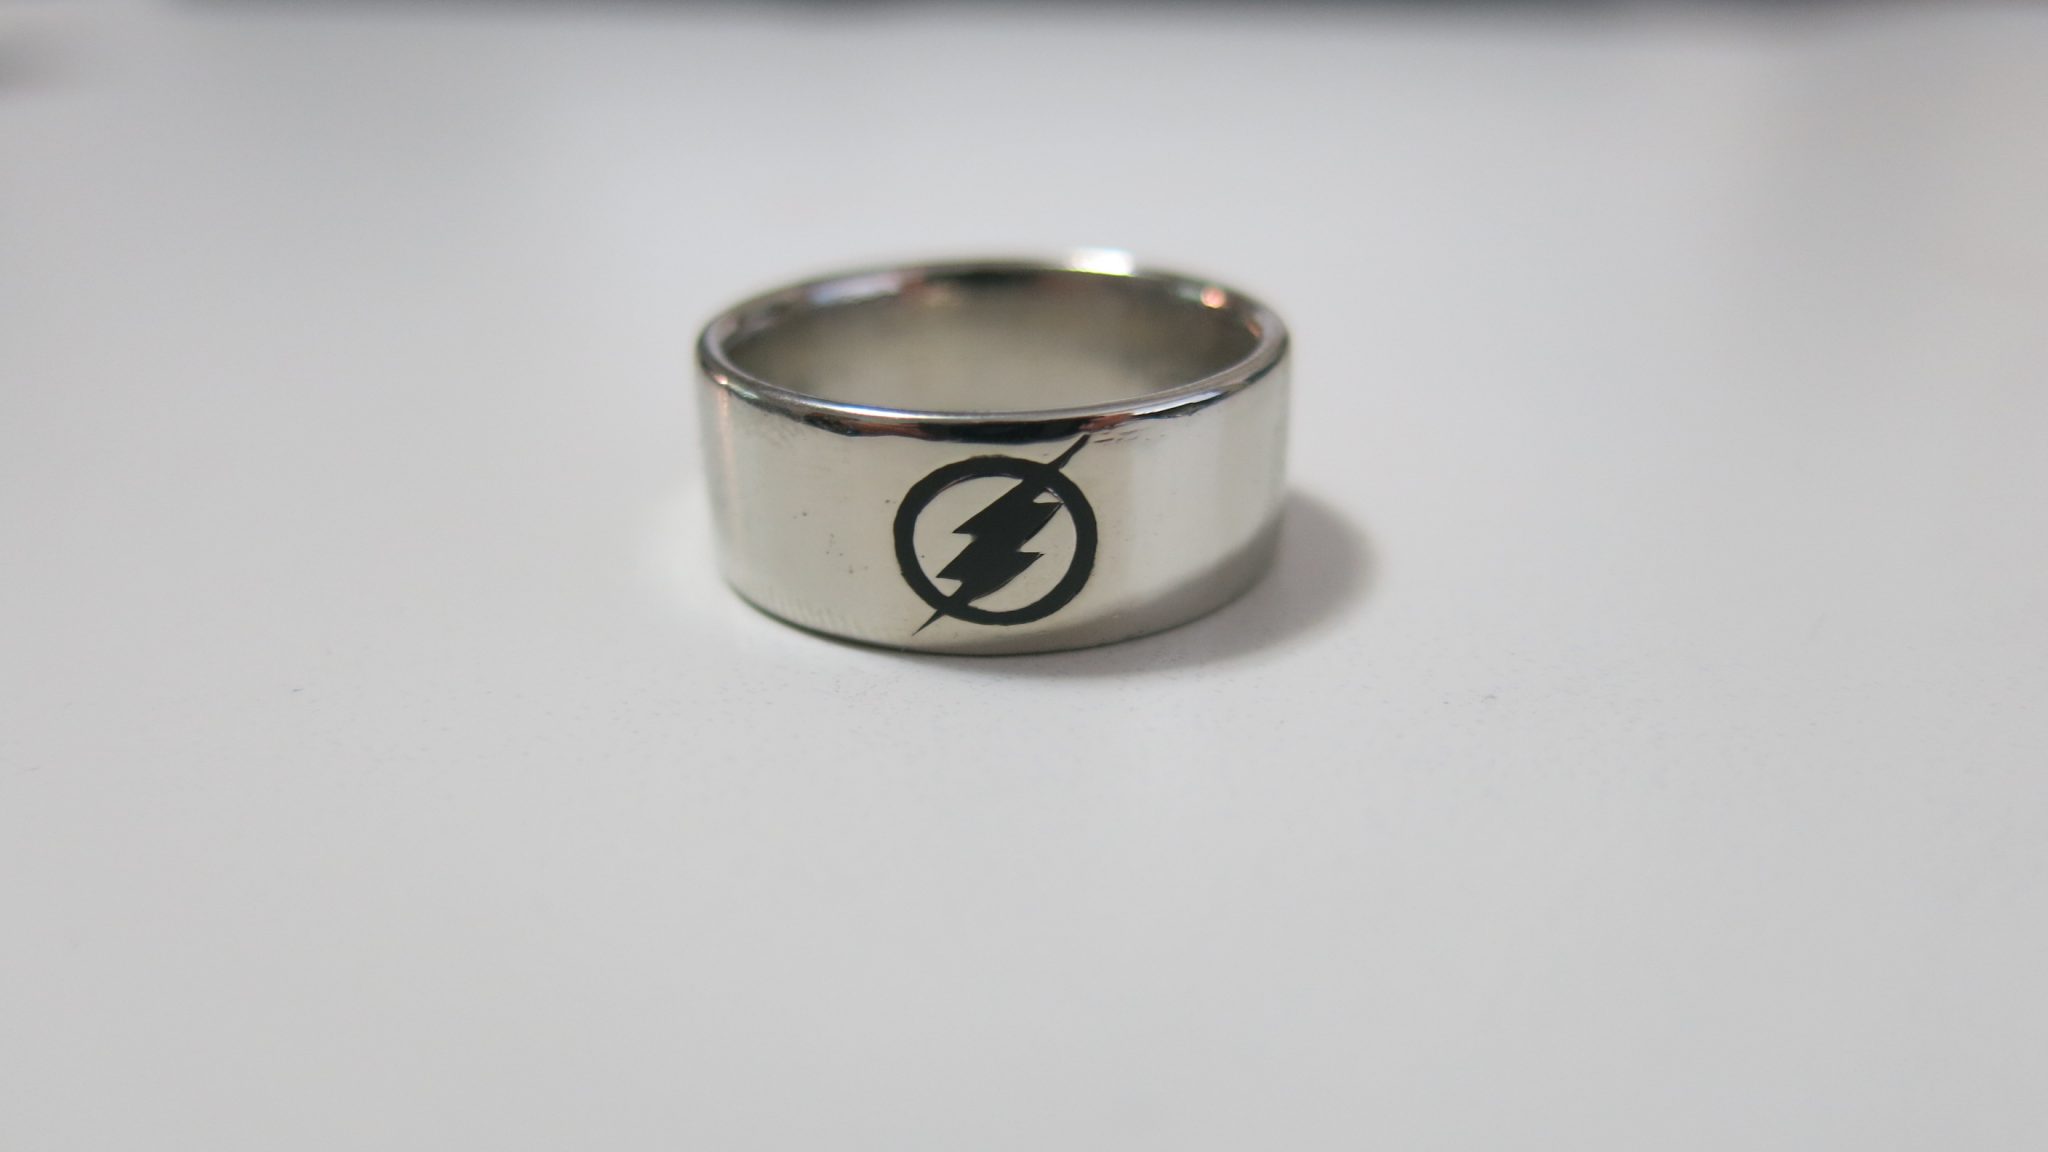 The Flash Wedding Rings Are Pretty Flash